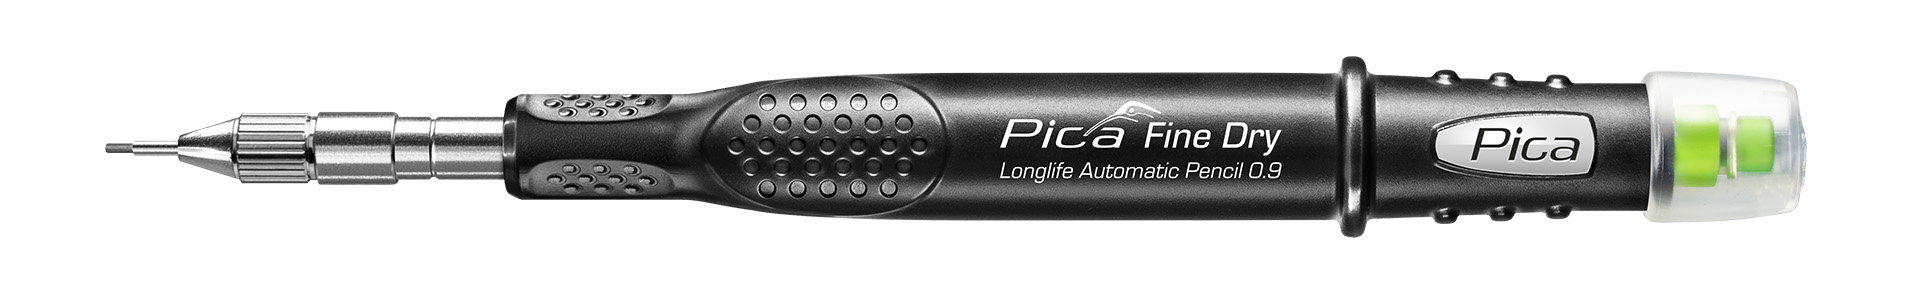 Pica® - Fine Dry Longlife Automatic Pencil 0.9